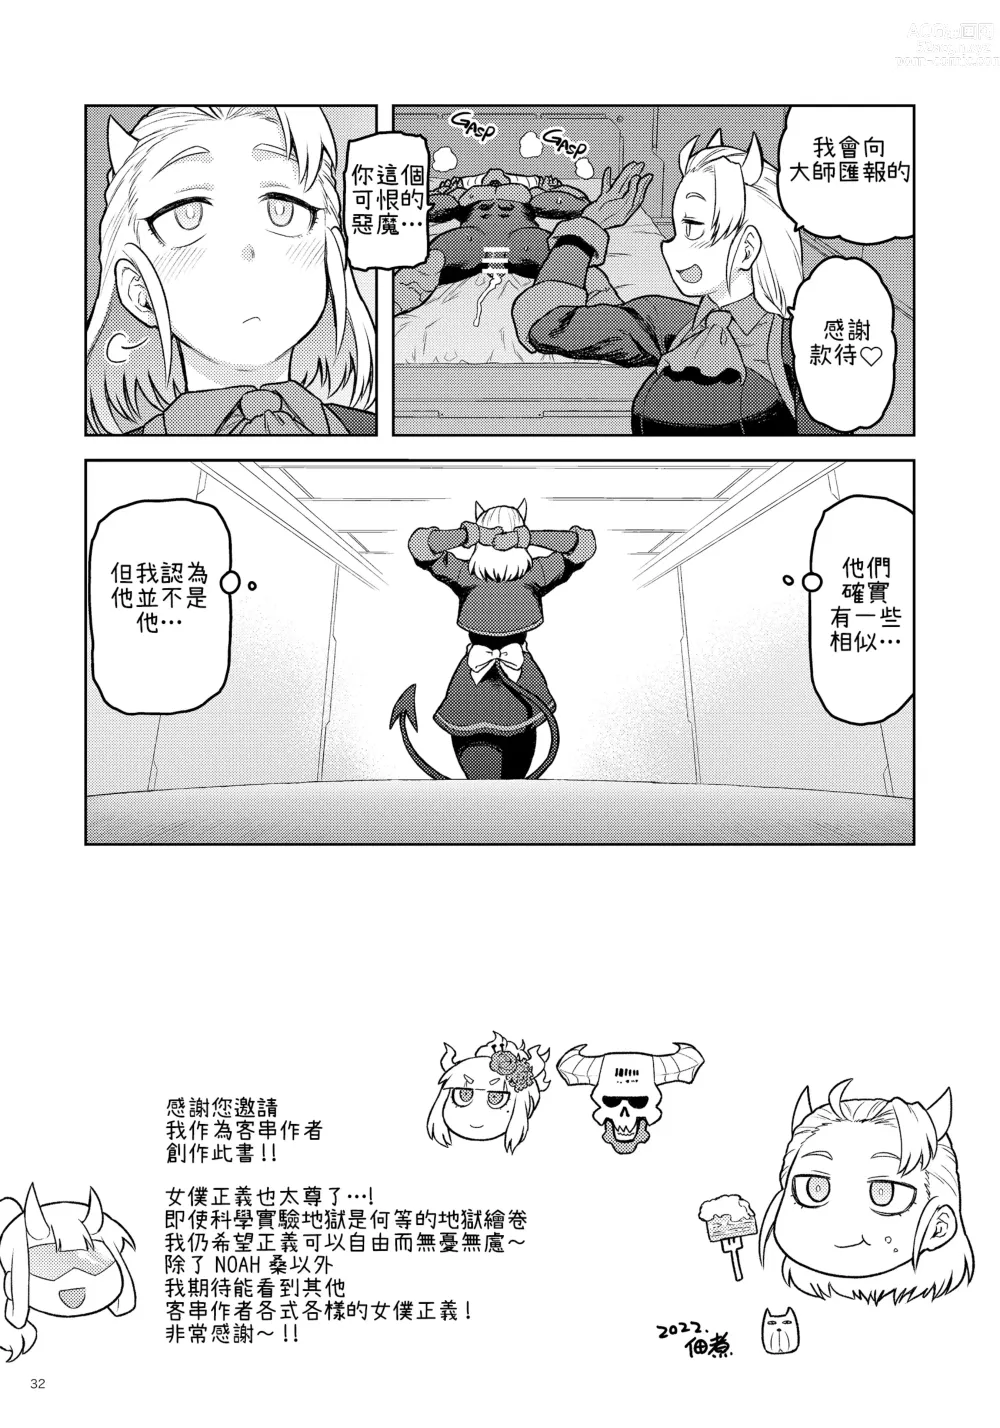 Page 32 of doujinshi Re: